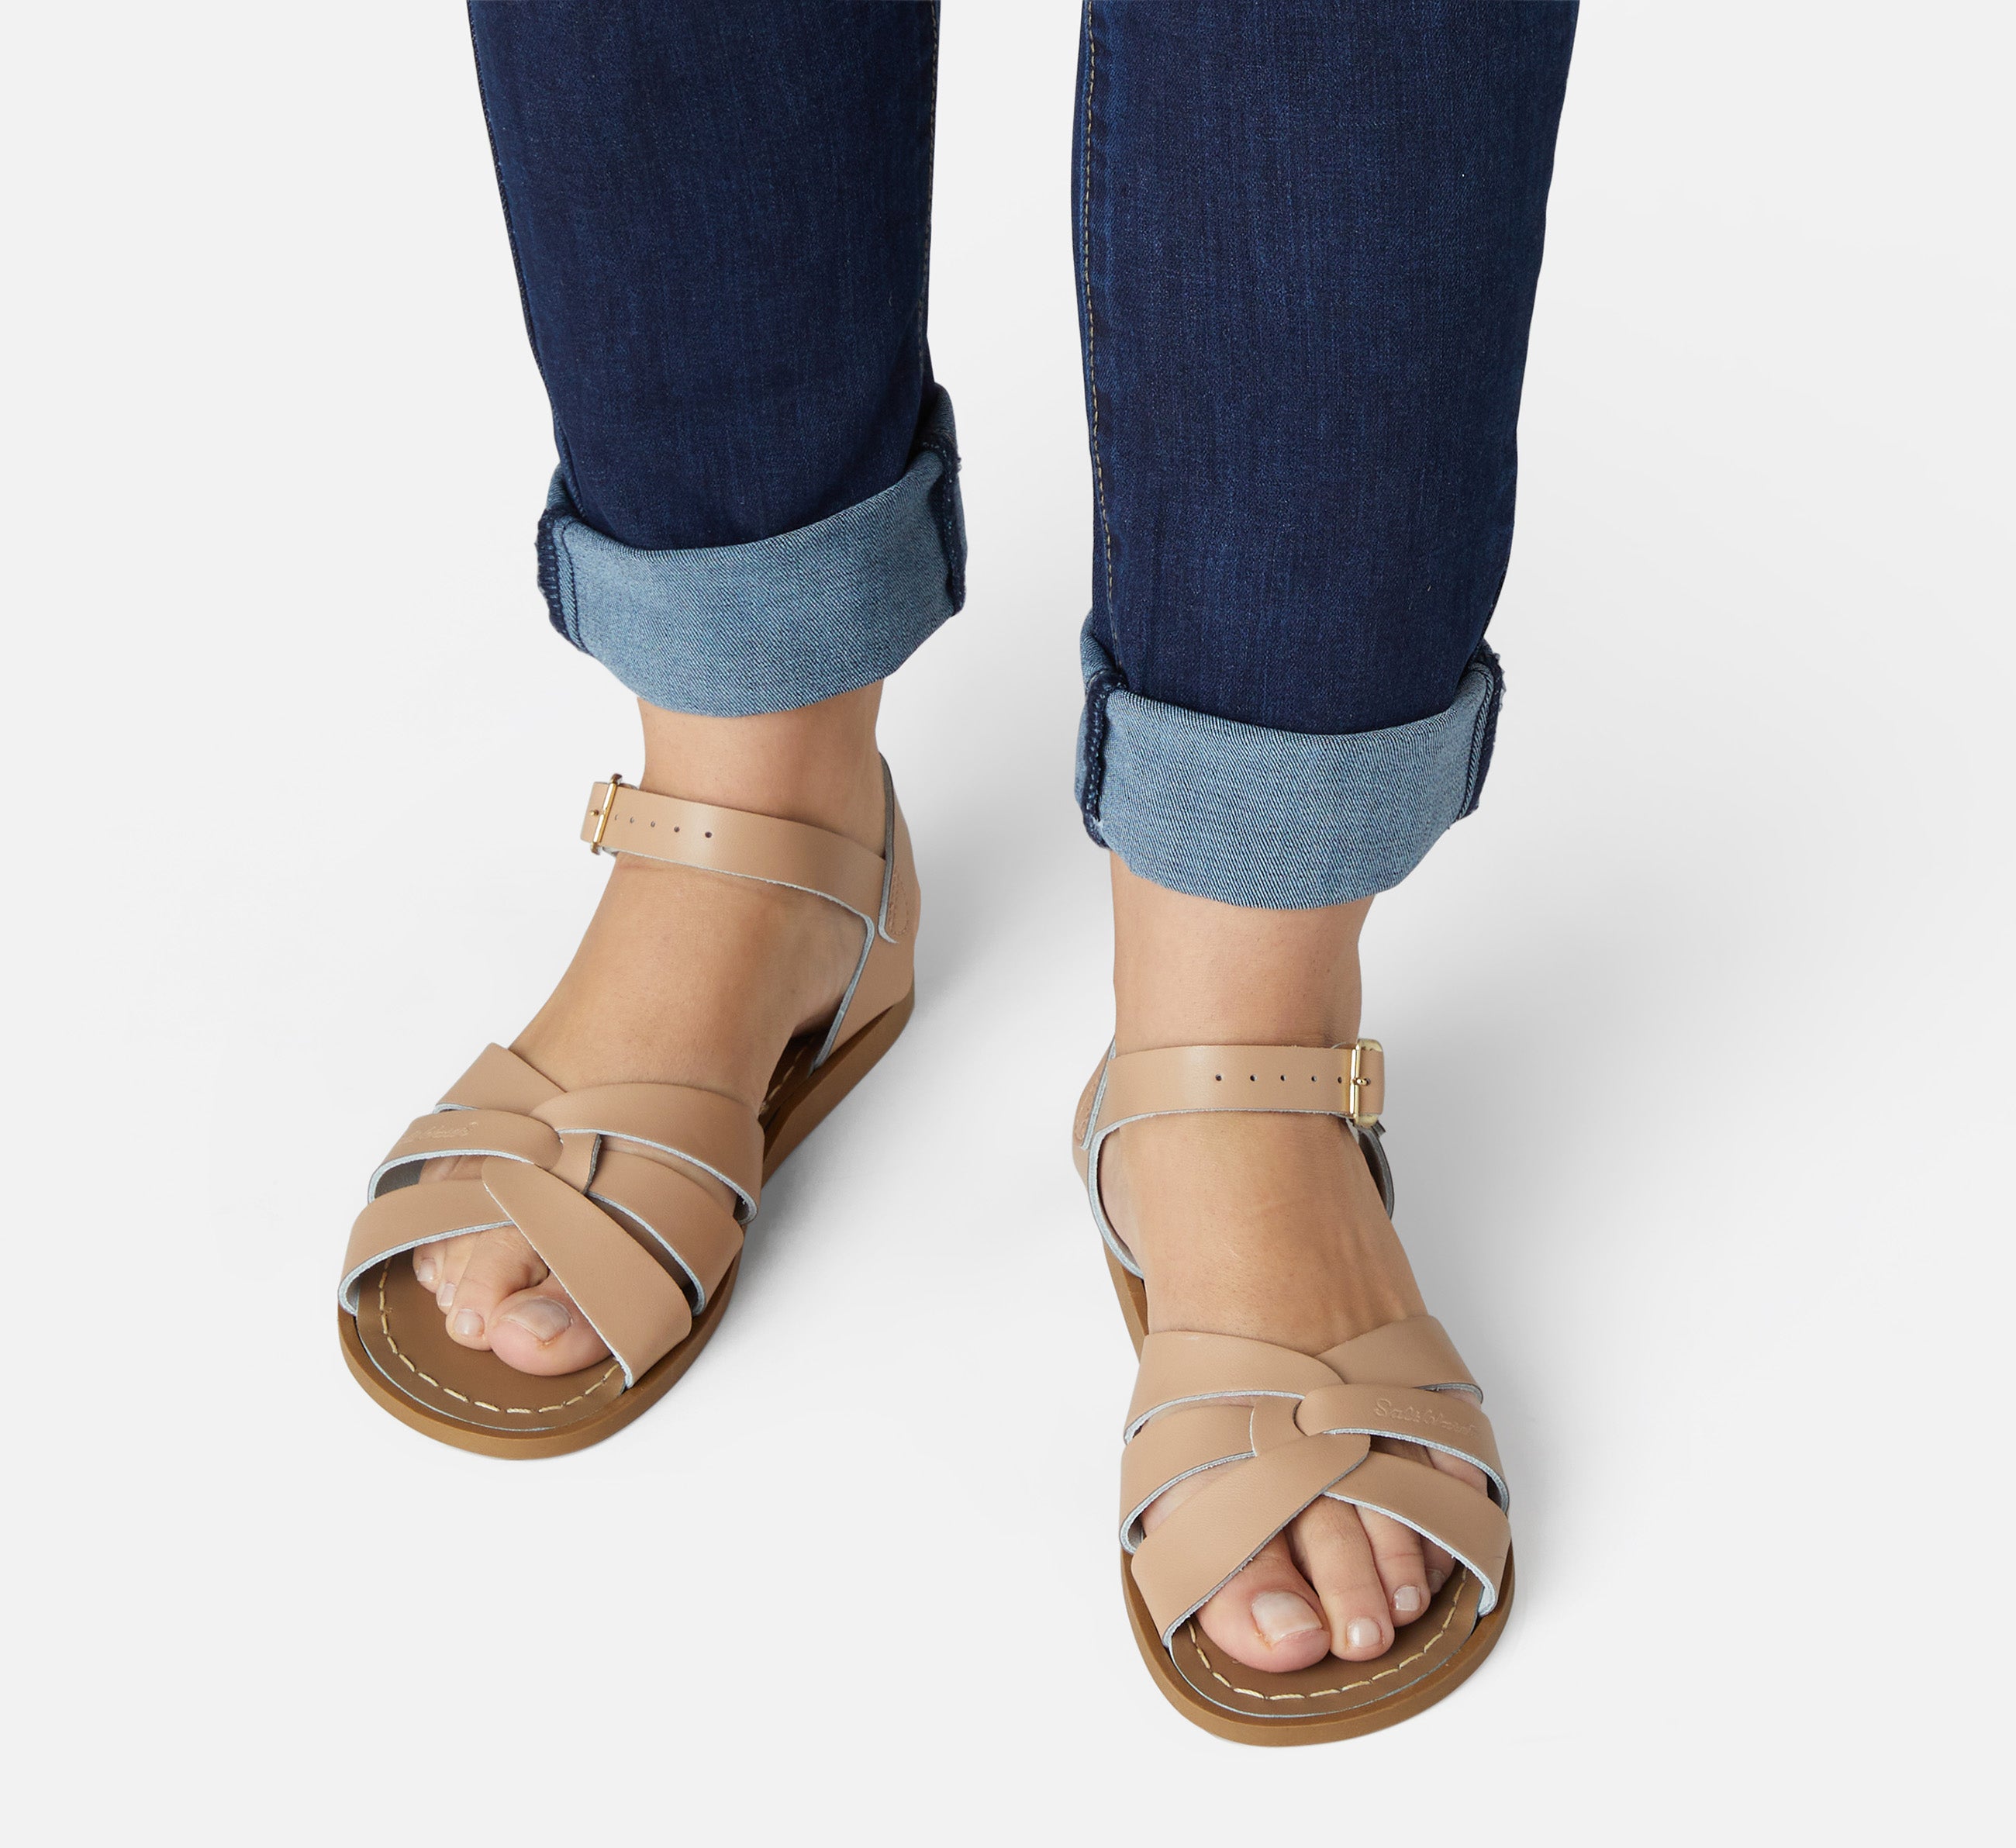 Salt-Water Original Sandals - Iconic Waterproof Flat Sandals